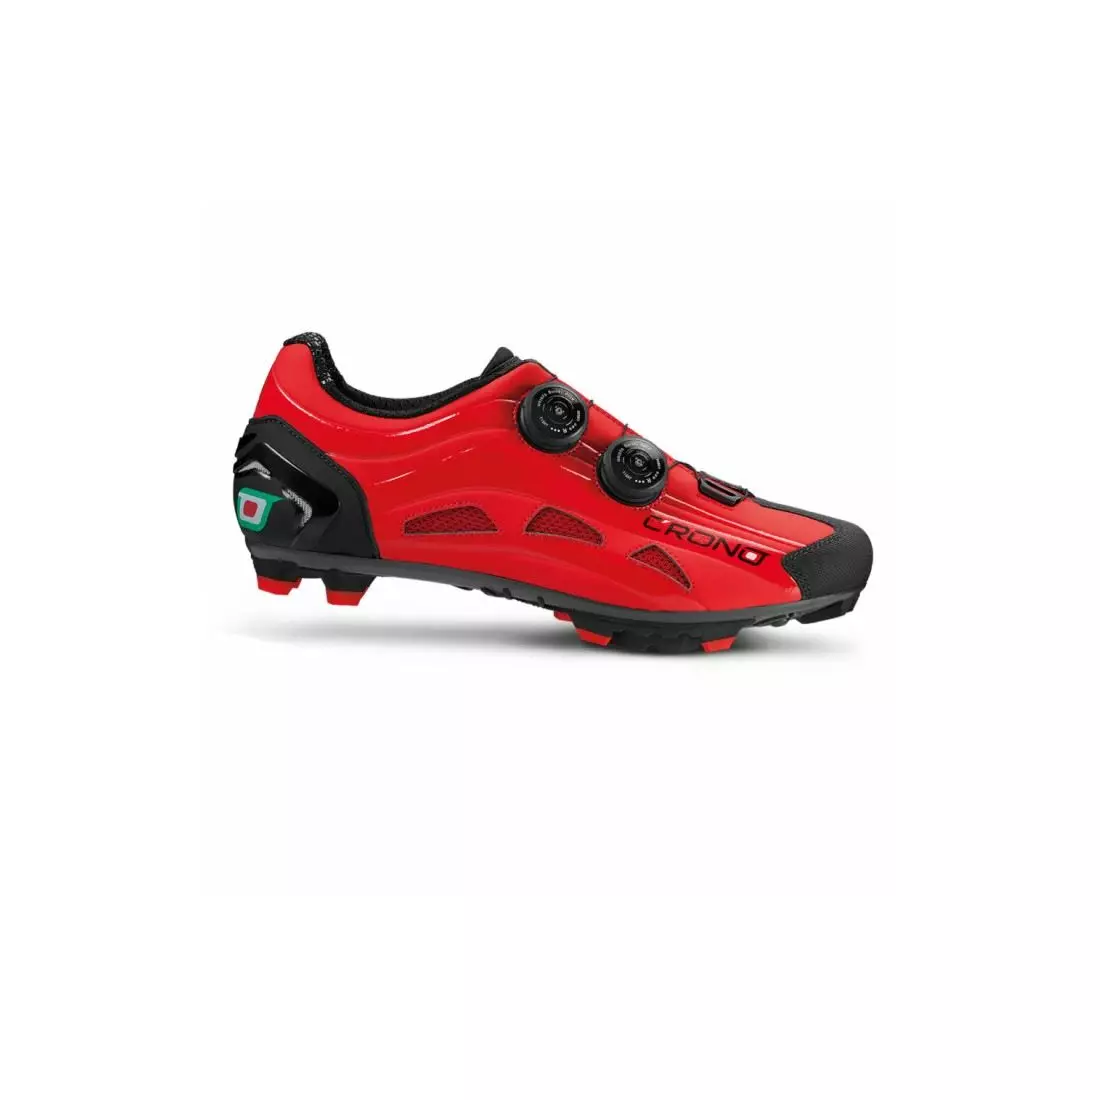 CRONO MTB EXTREMA 2 NEW men's MTB cycling shoes, nylon red 